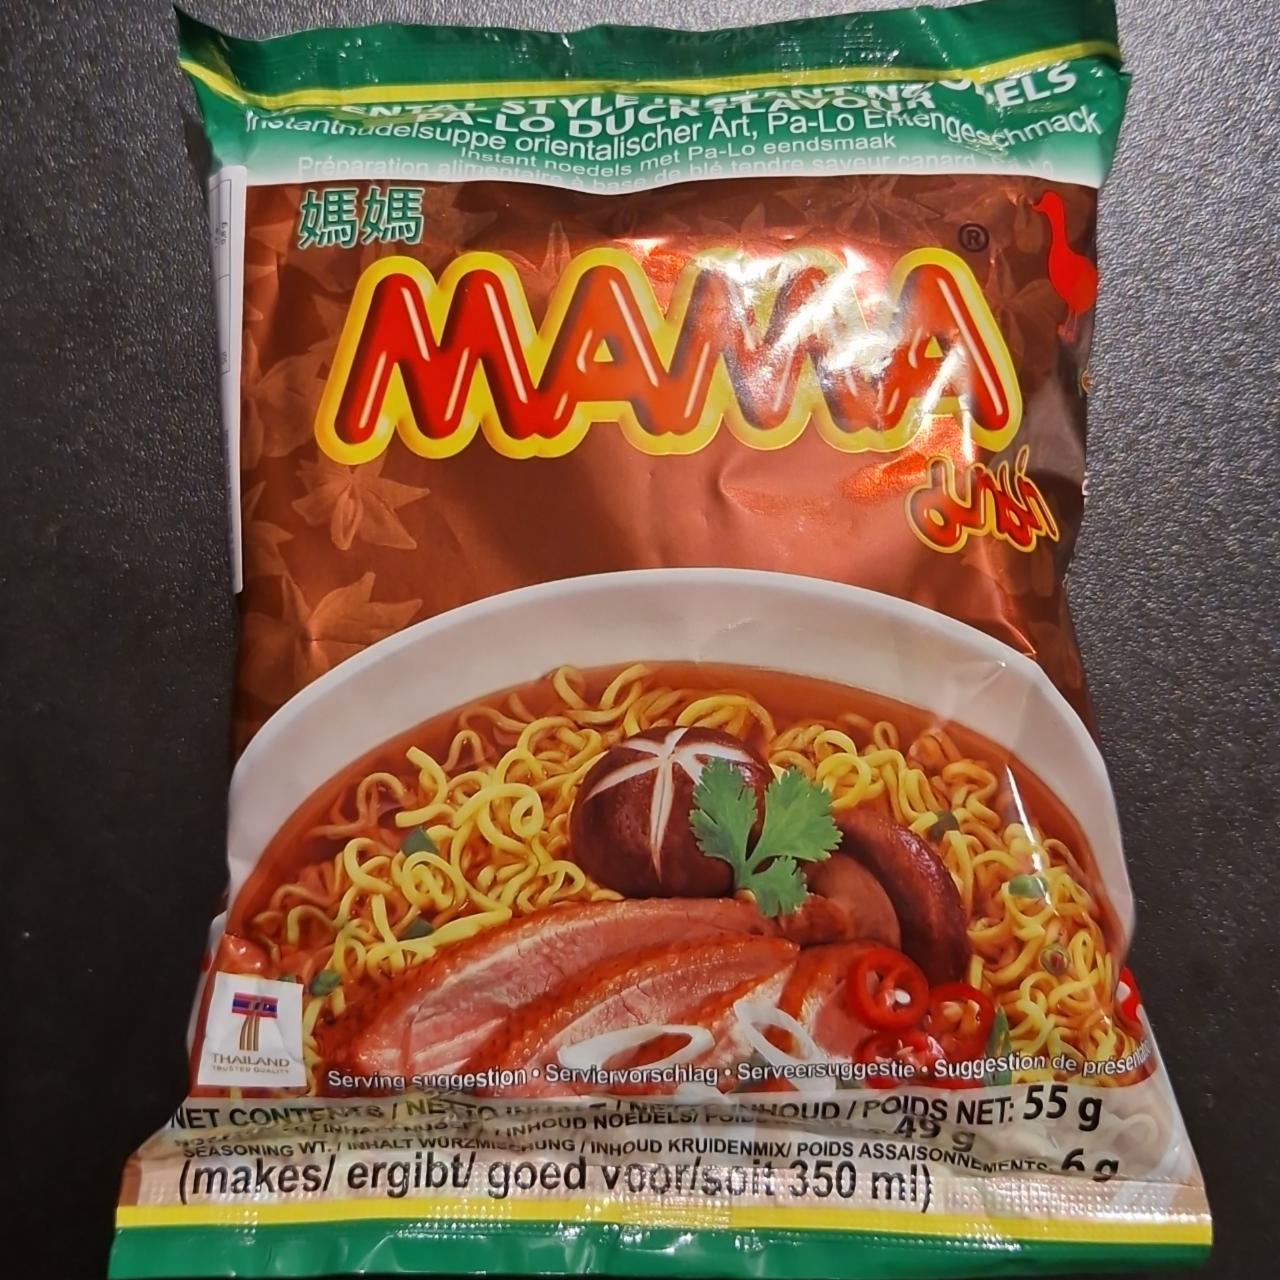 Fotografie - Oriental style instant noodels pa-lo Duck flavour soup Mama